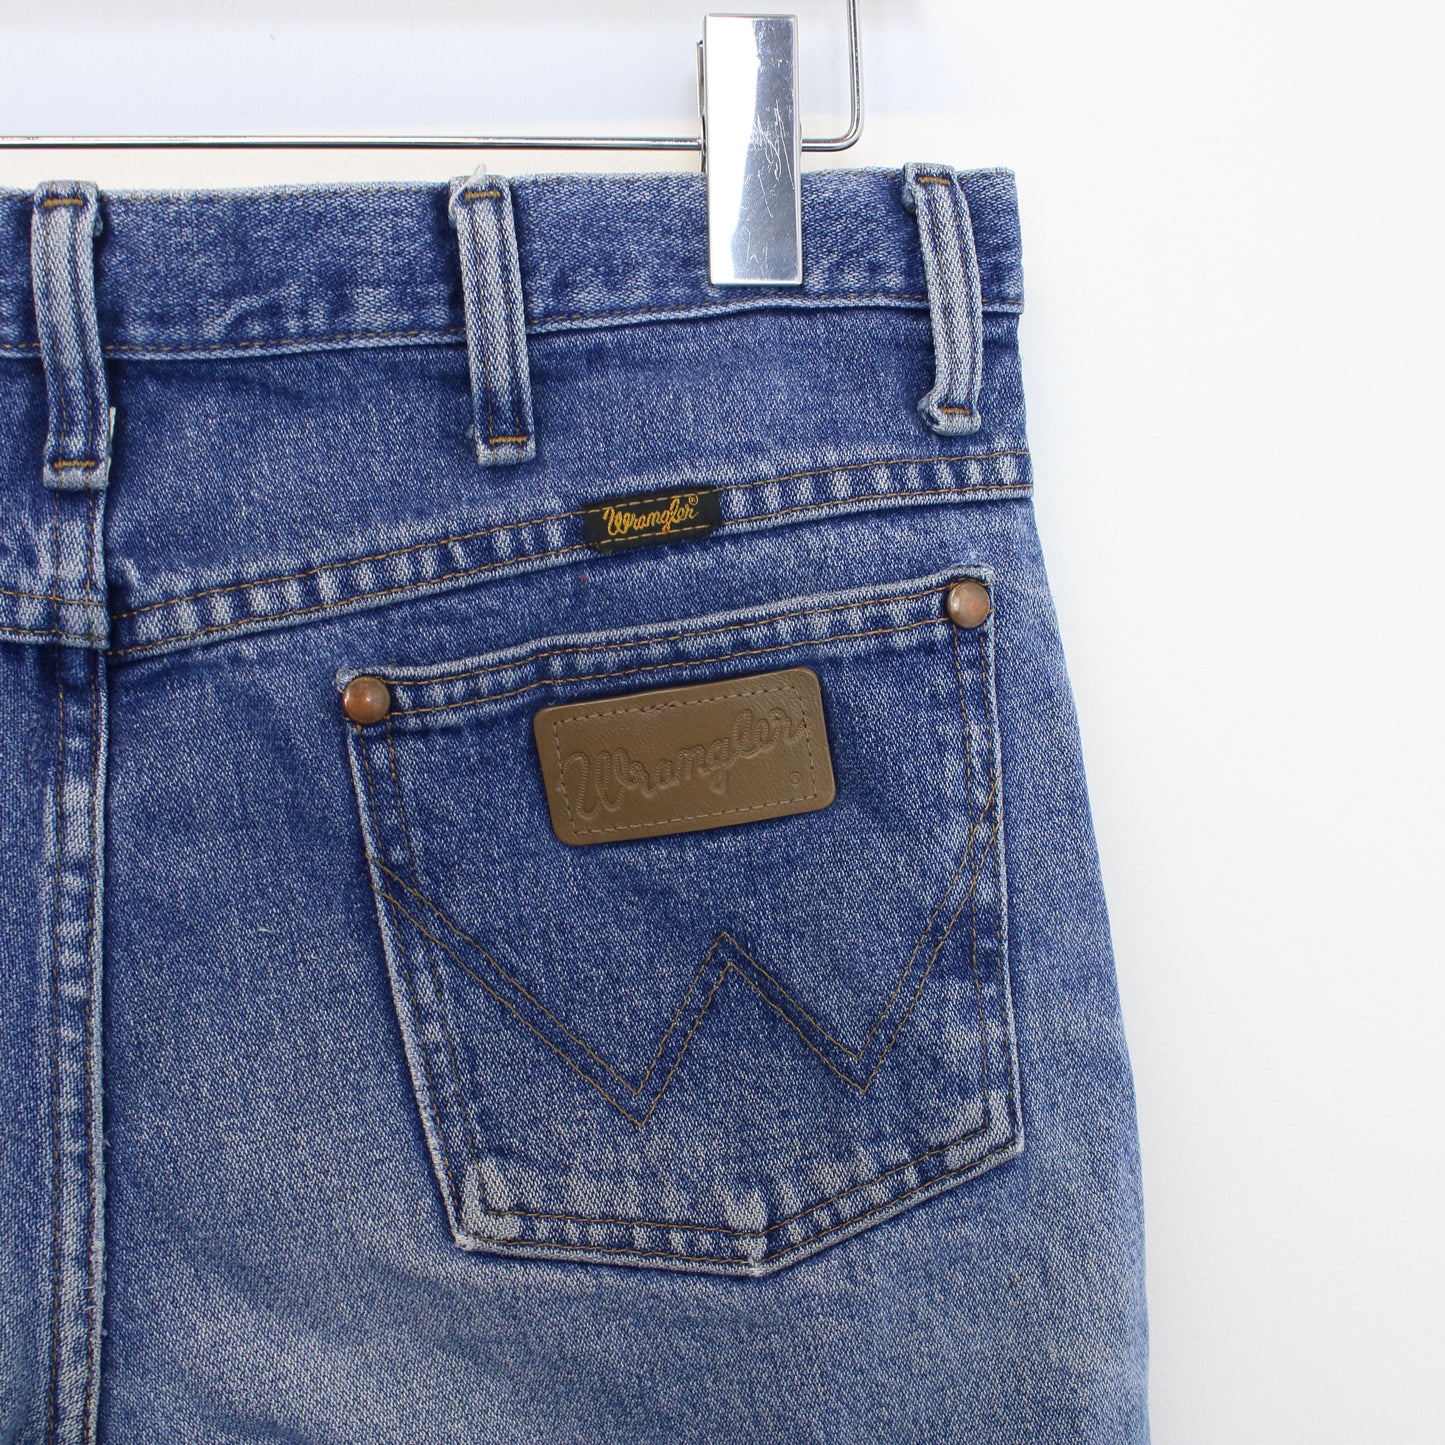 Vintage Wrangler jeans in Blue. Best fits 34W